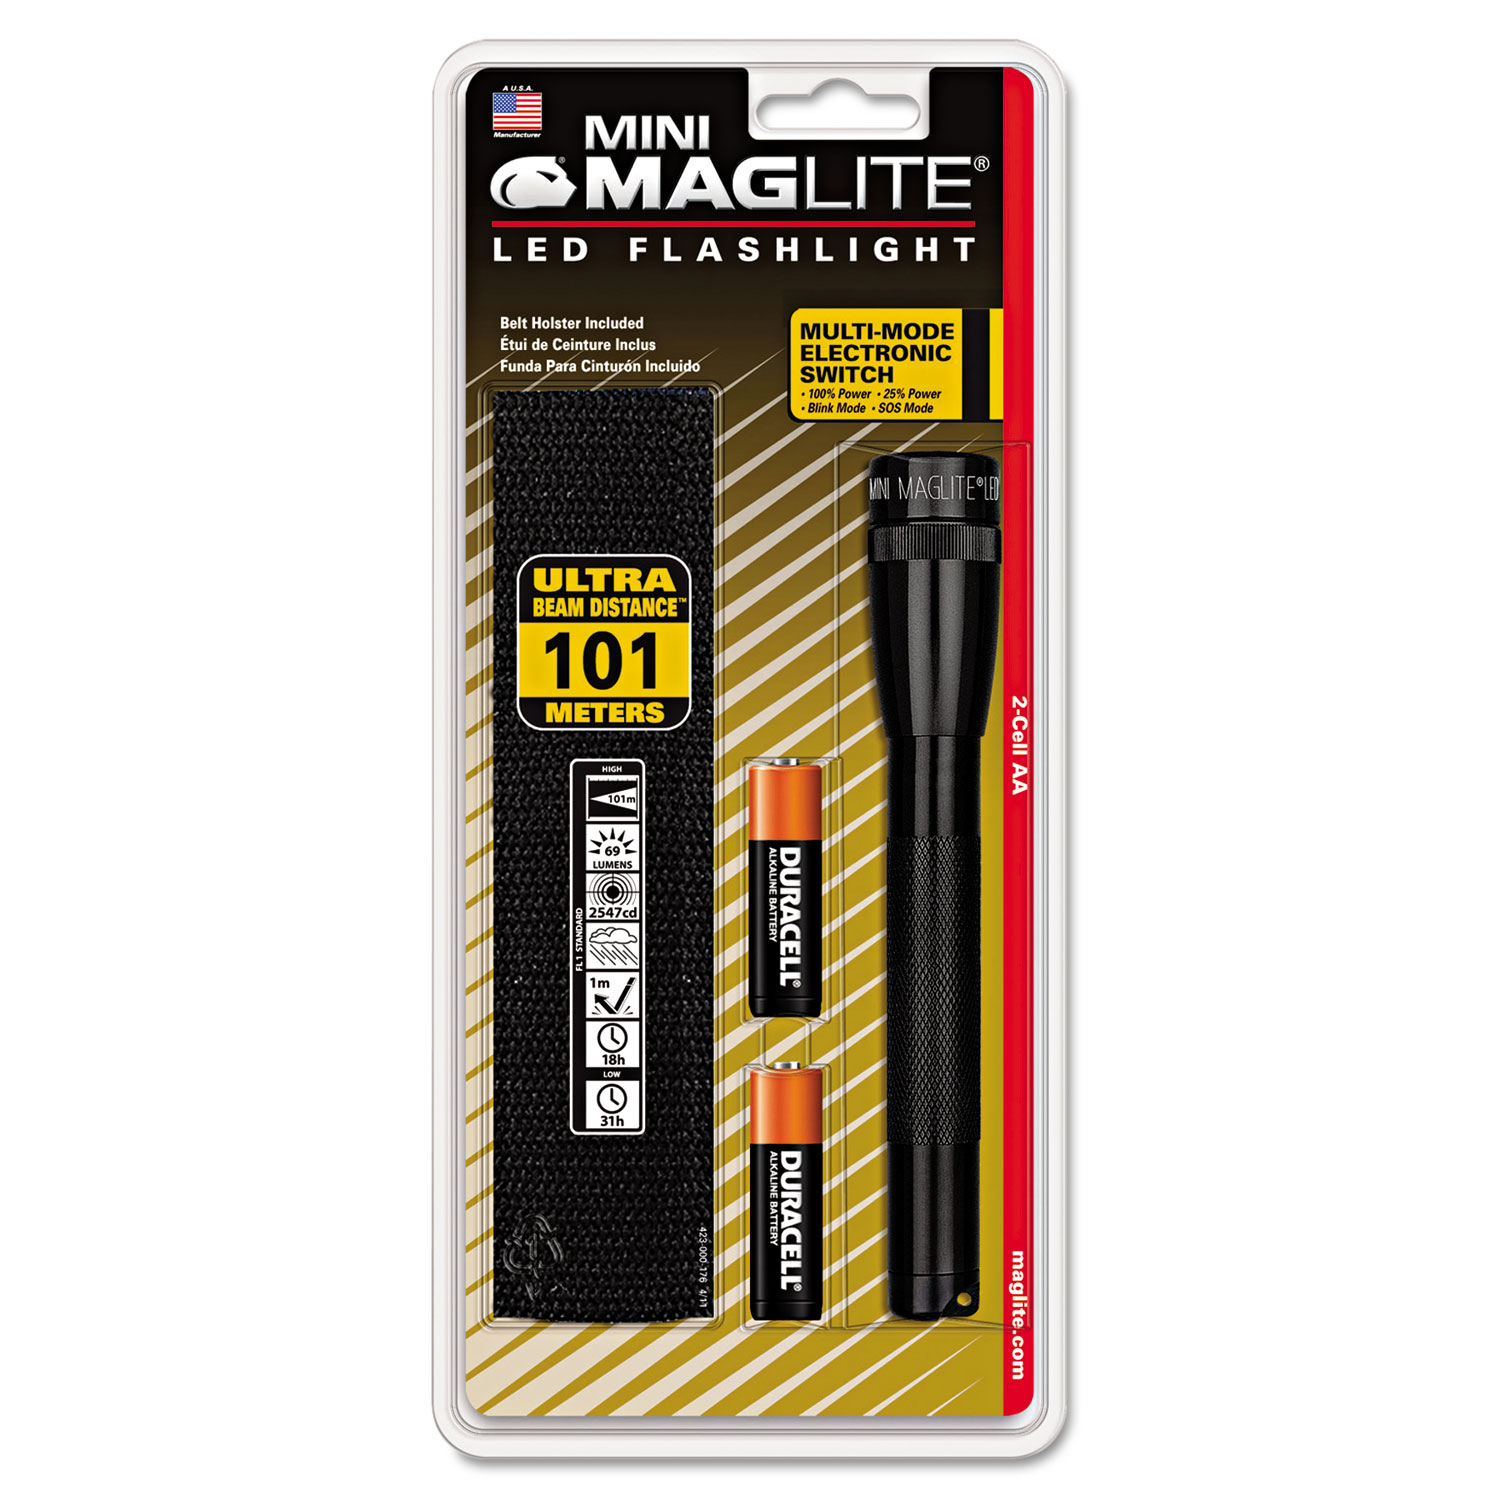  Maglite SP2201HJ Mini LED Flashlight, 2 AA Batteries (Included), Black (MGLSP2201H) 